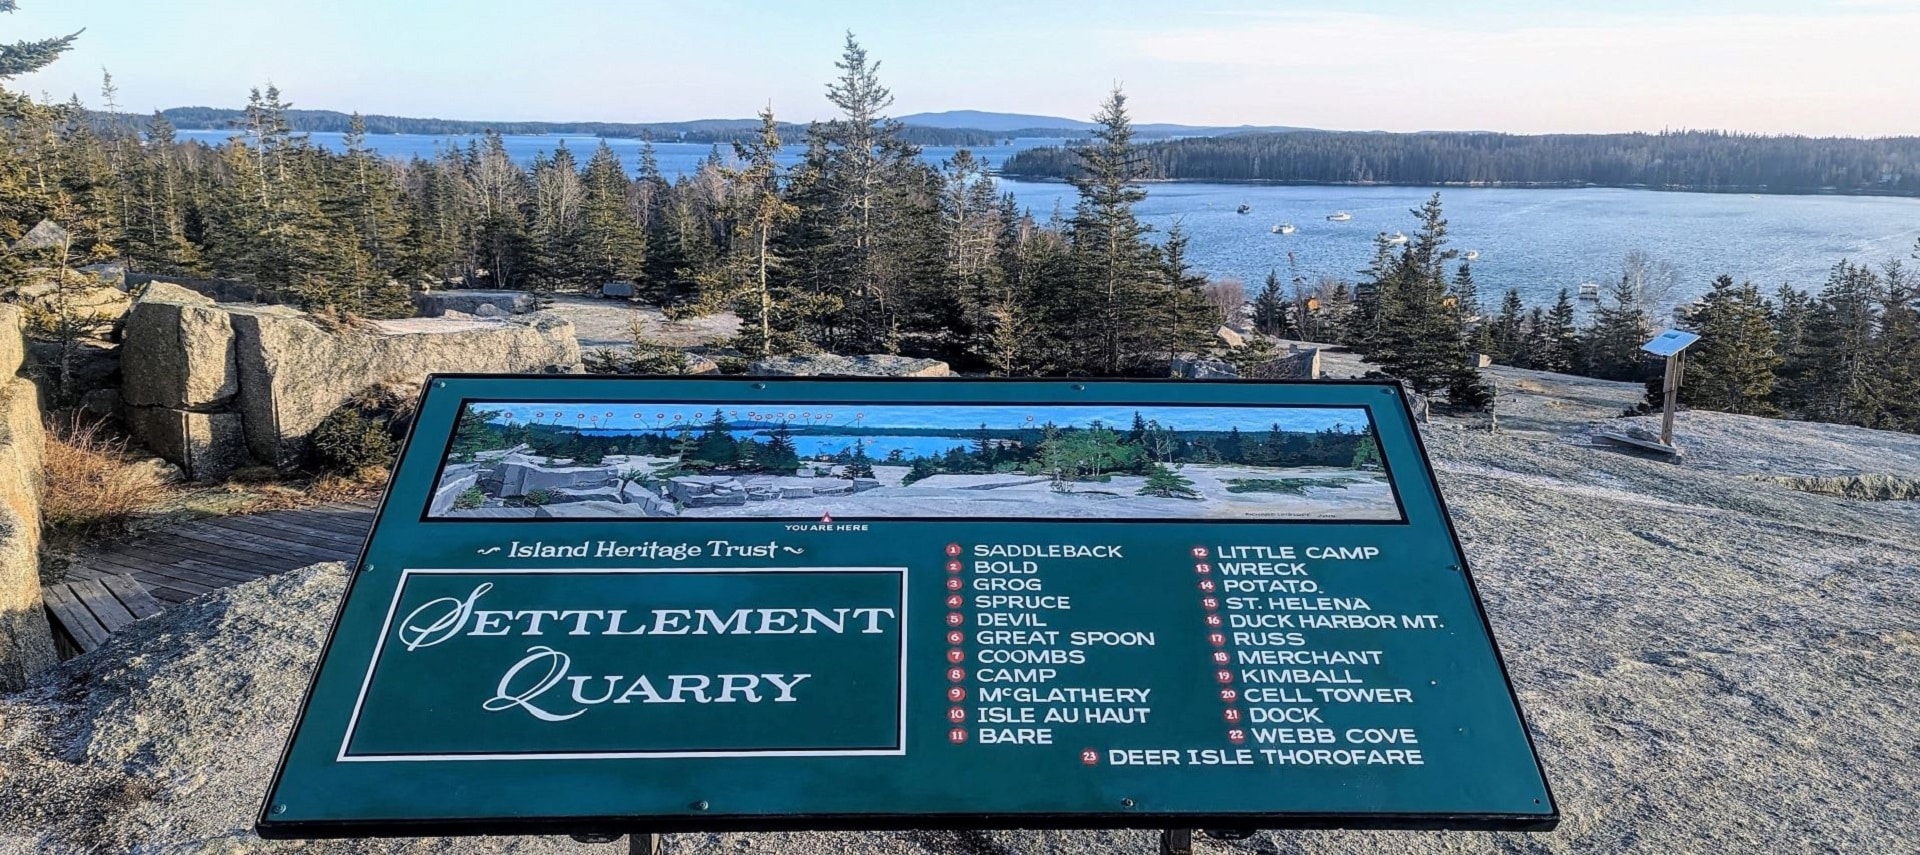 Settlement Quarry sign overlooking ocean